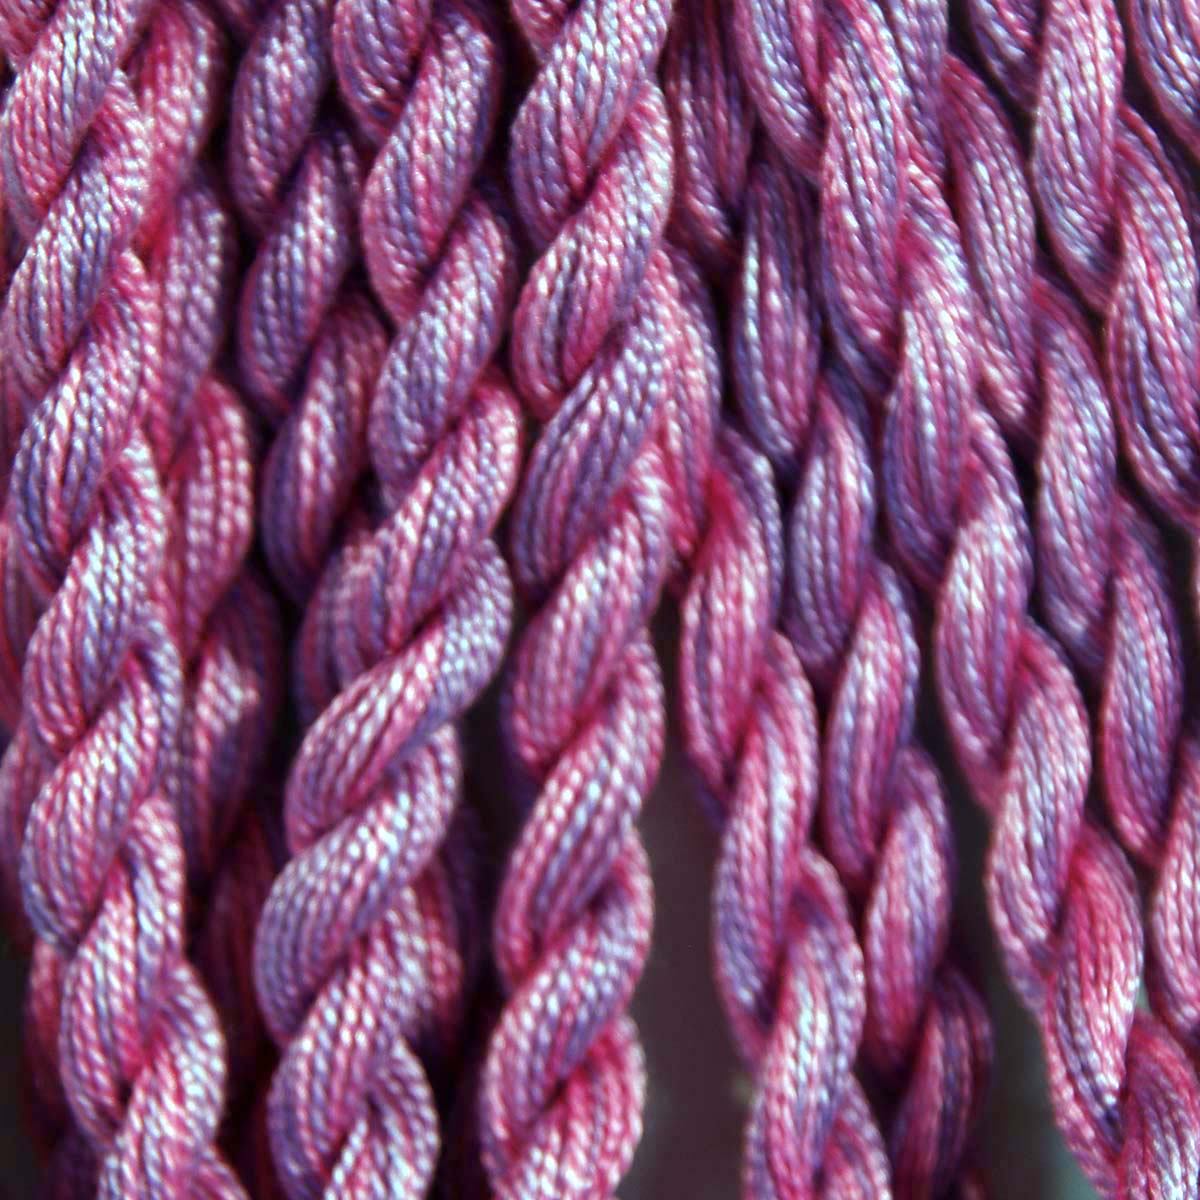 www.colourstreams.com.au Colour Streams Hand Dyed Cotton Threads Cotto Strands Slow Stitch Embroidery Textile Arts Fibre DL 35 Mardigras Purples Pinks